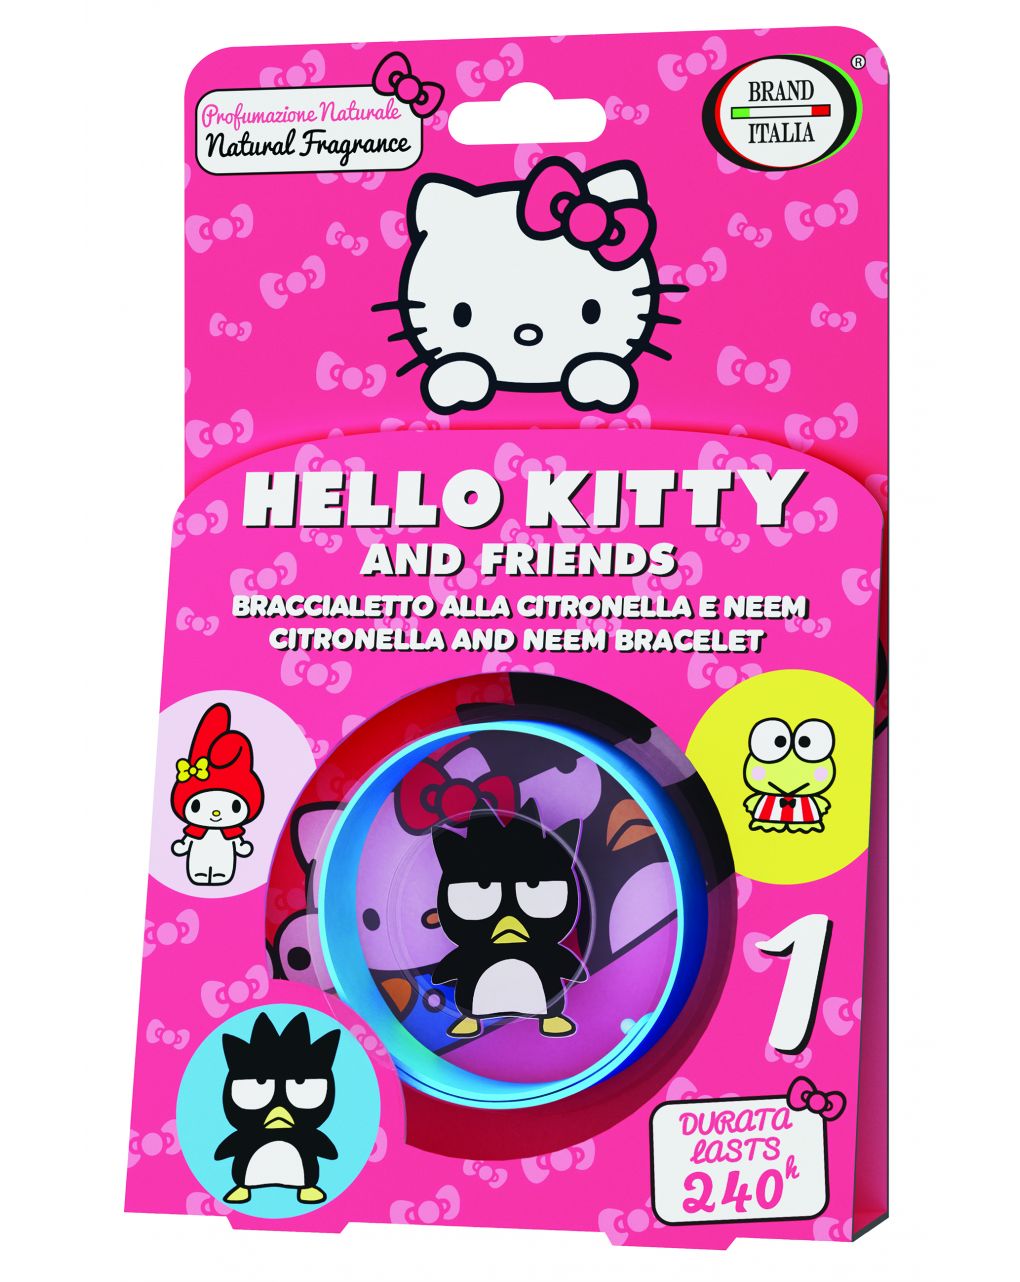 Hello kitty and friends litronella and neem bracelet - marca itália - Brand Italia